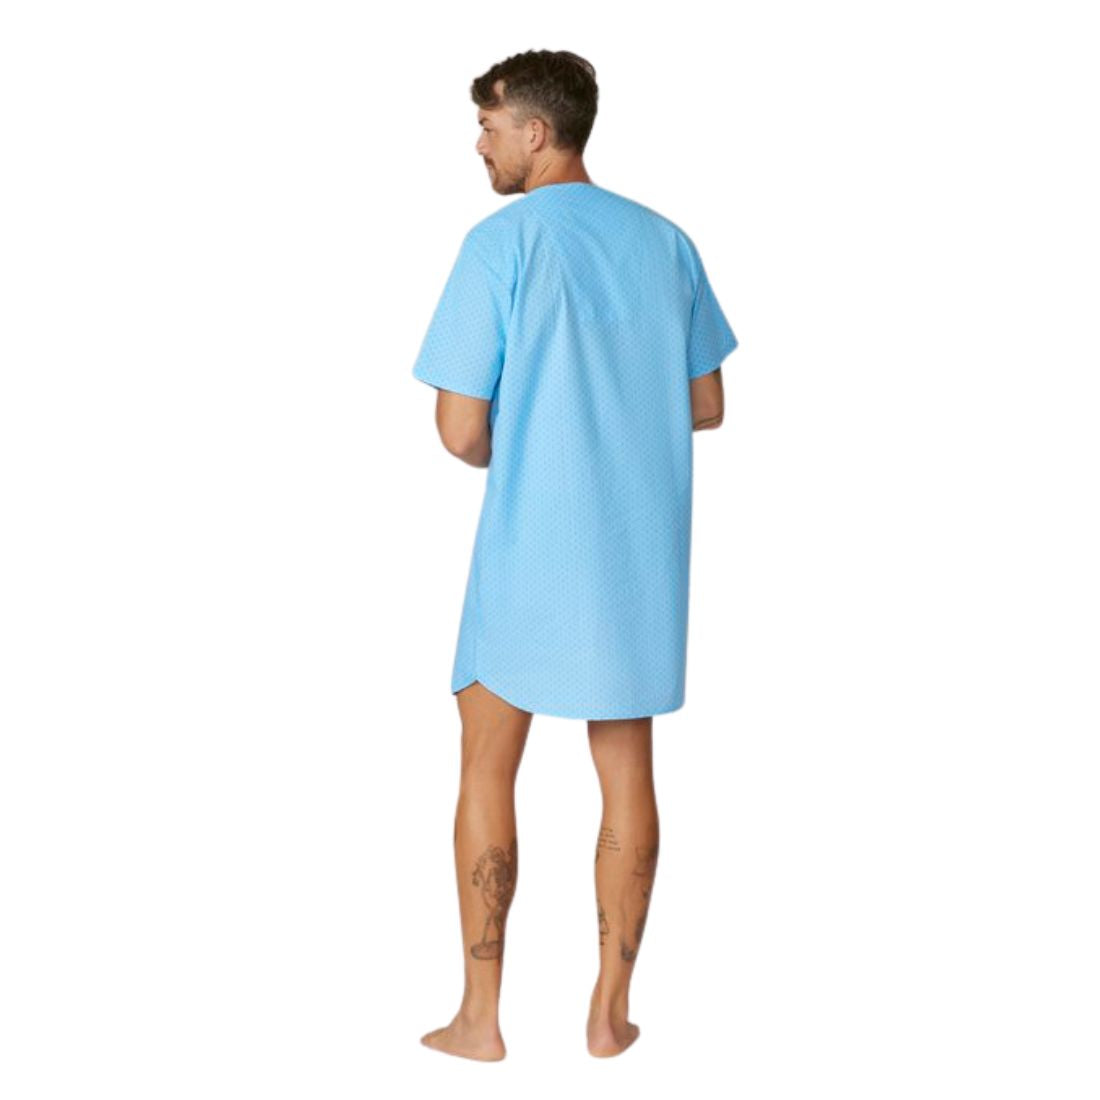 Contare Cotton Rich Night Shirt Blues Assorted Mens Sleepwear by Lynx | The Bloke Shop